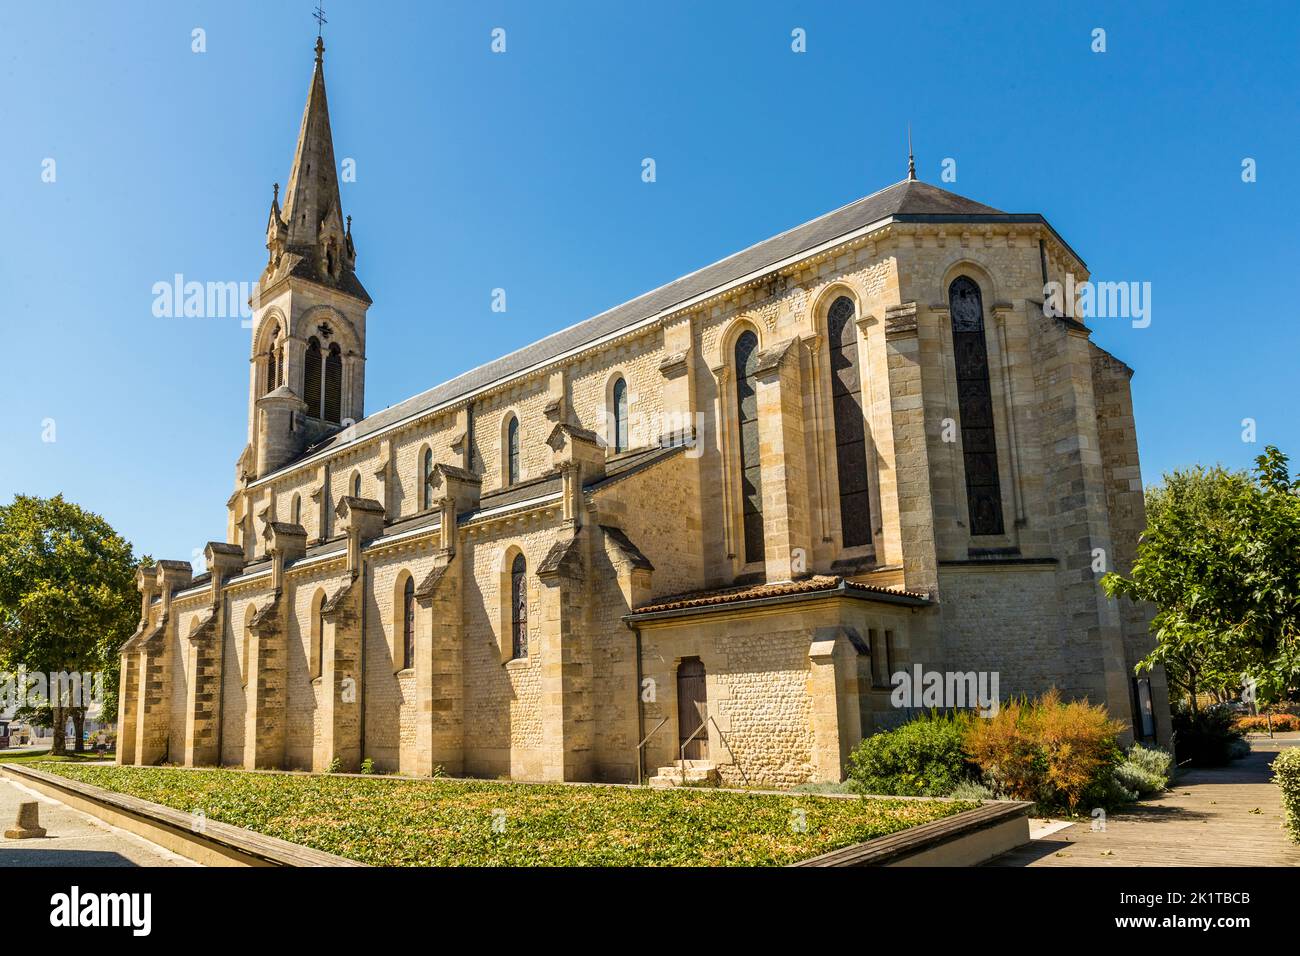 The church of Saint-Martin in Carcans, Lesparre-Médoc, France Stock Photo